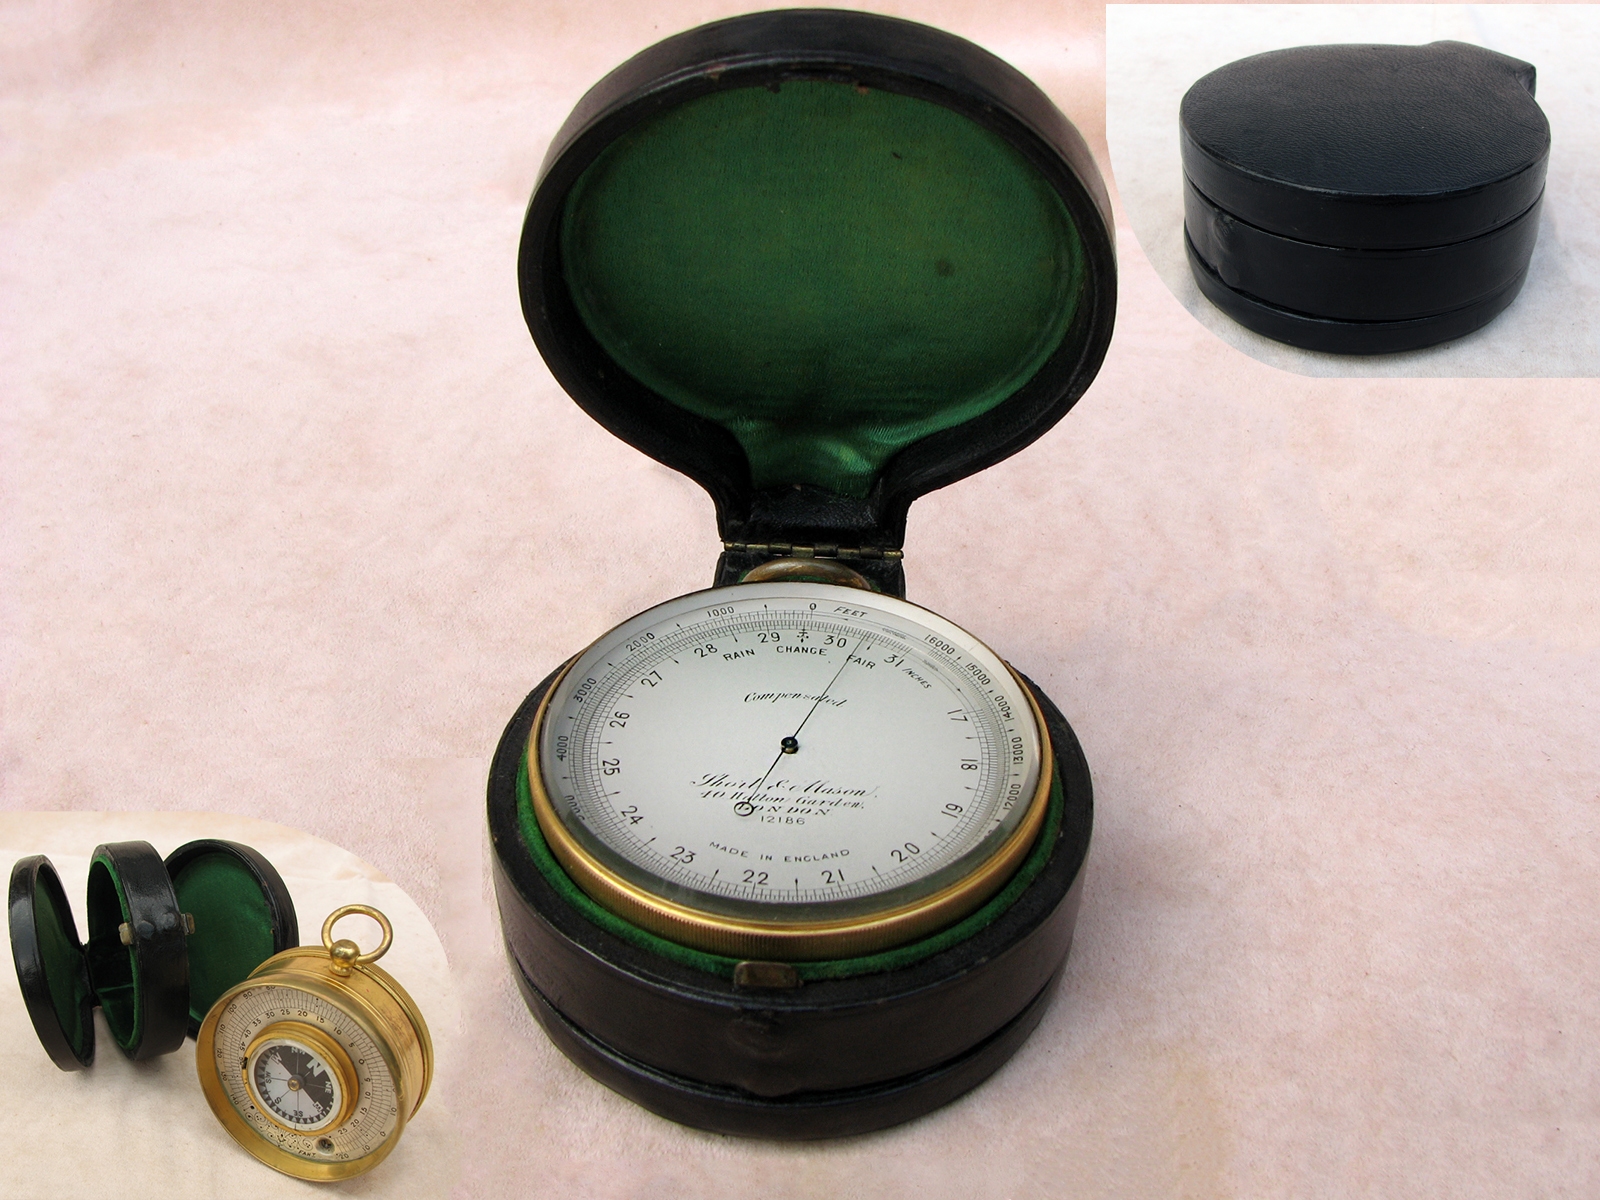 Short & Mason pocket barometer compendium in double lidded case - circa 1895